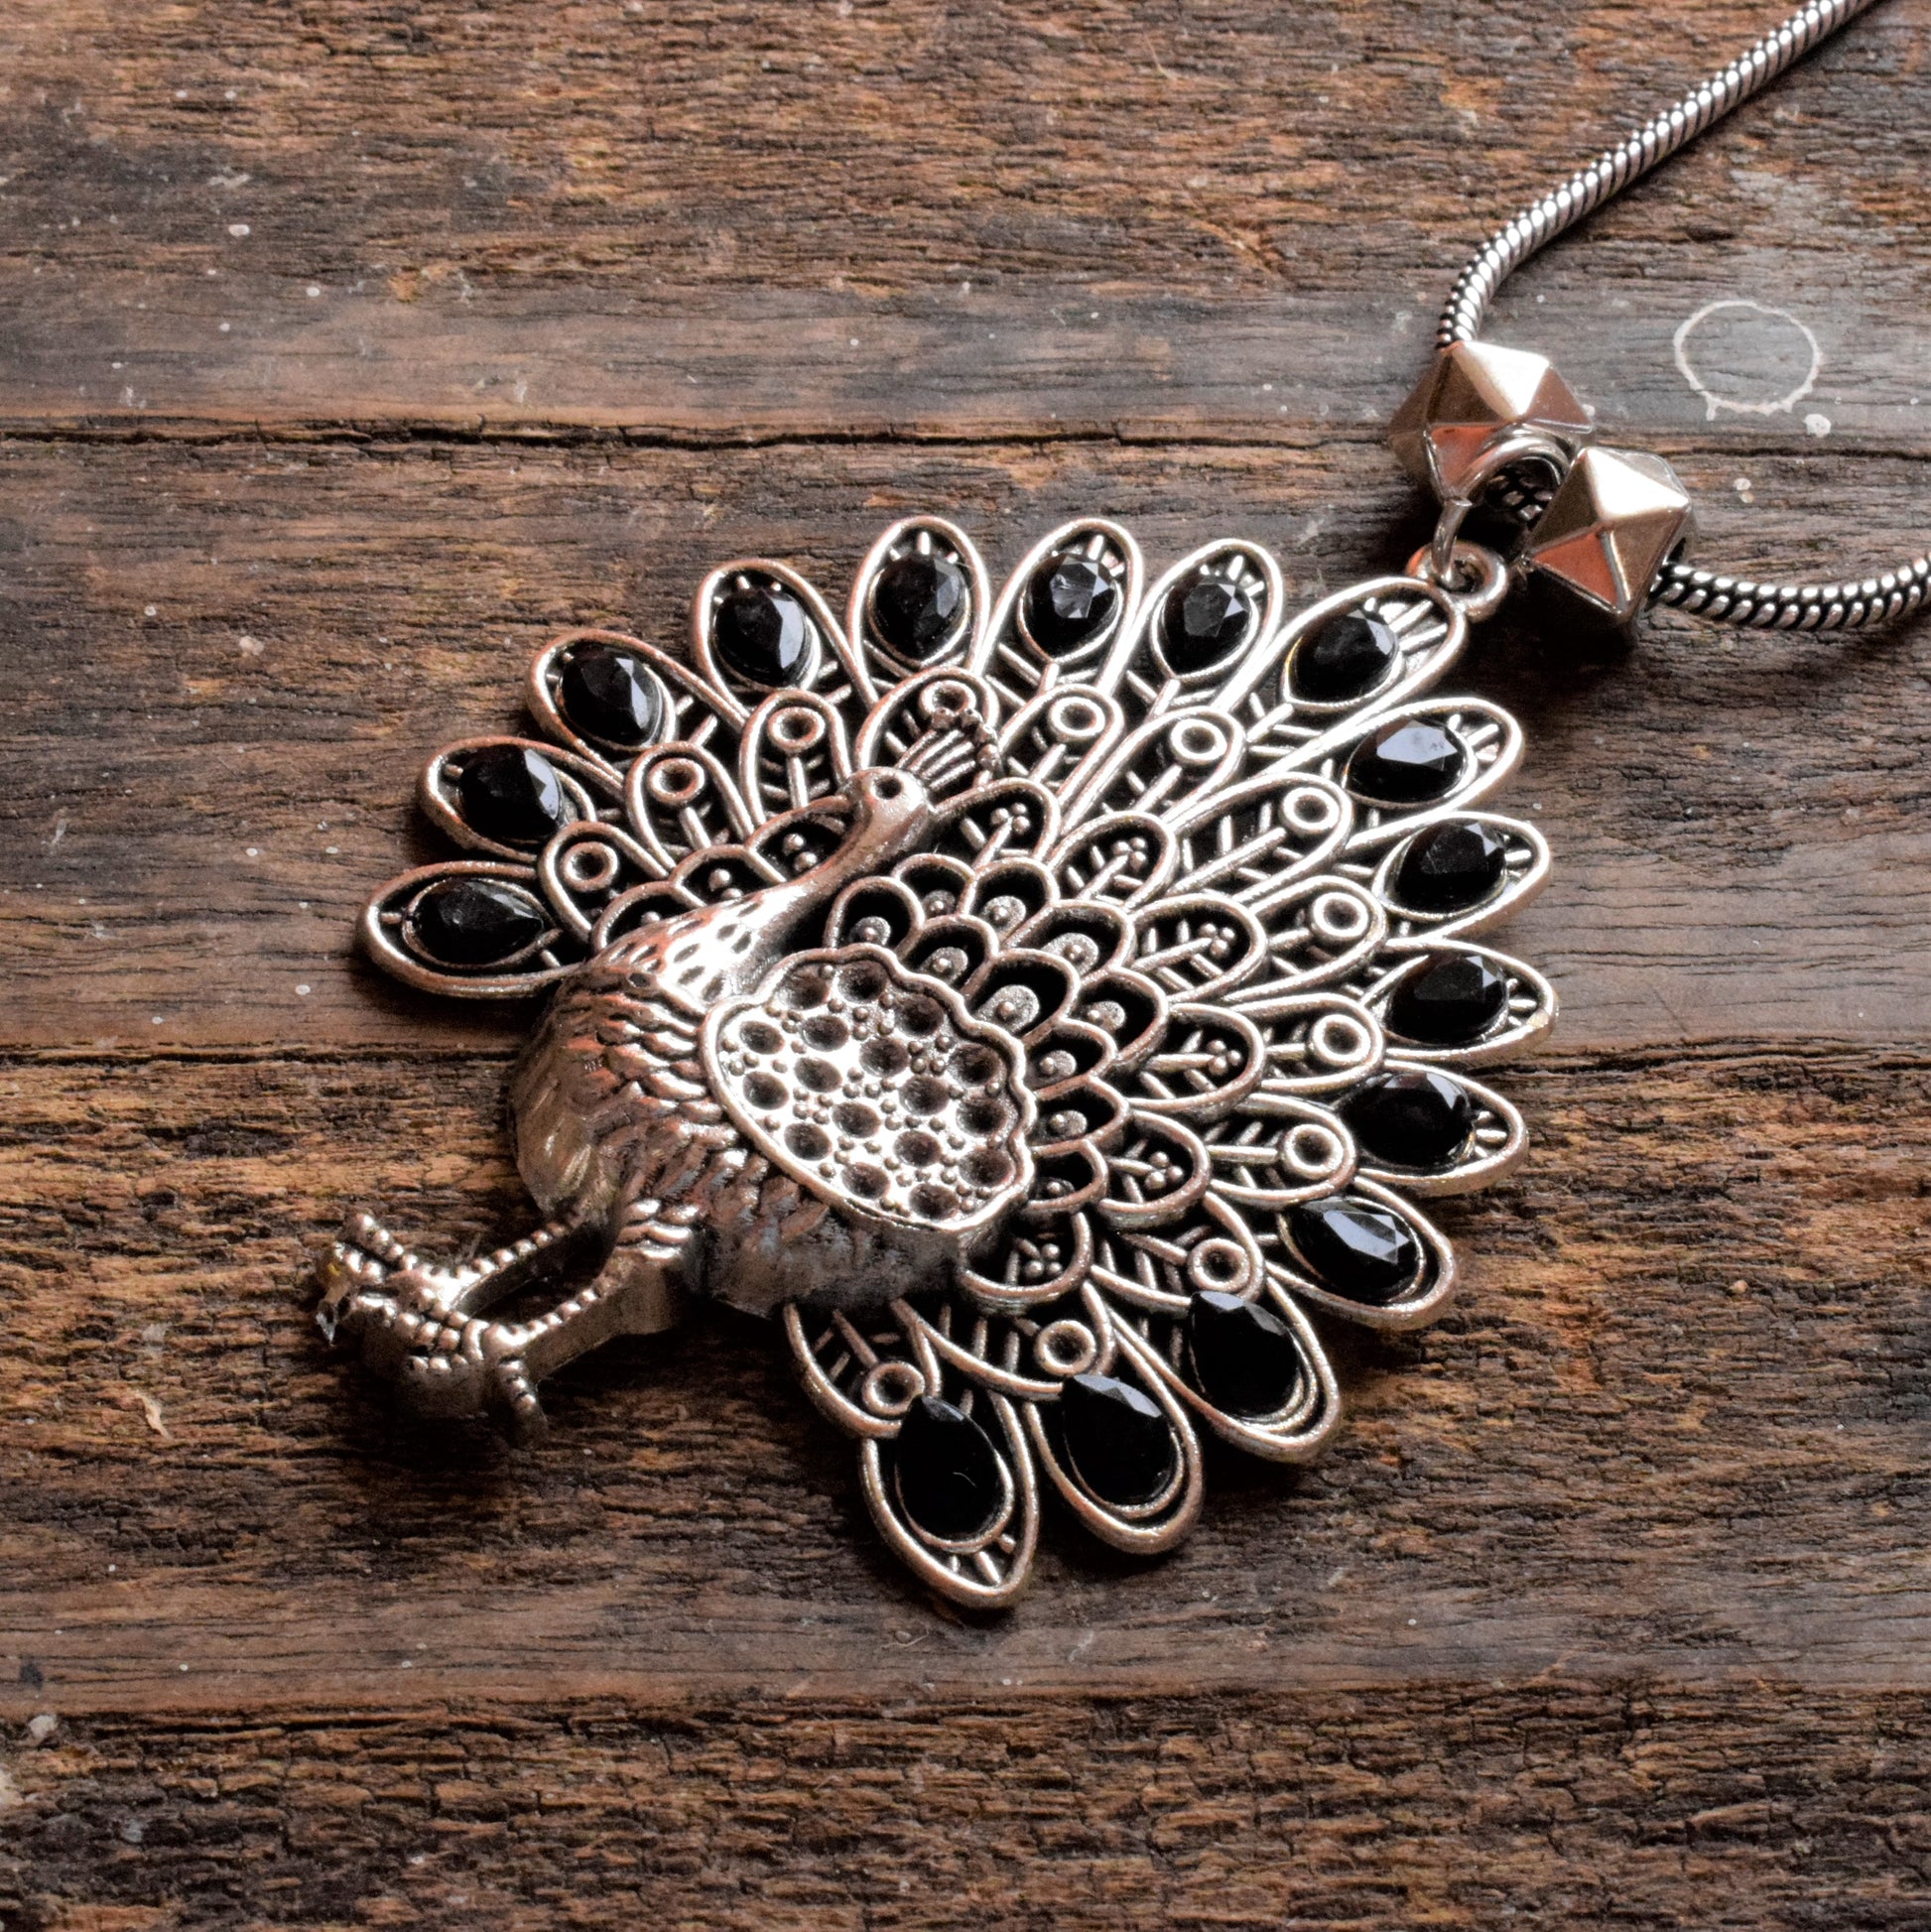 Silver Oxidised Peacock Gemstone Pendant Necklace - GlitterGleam